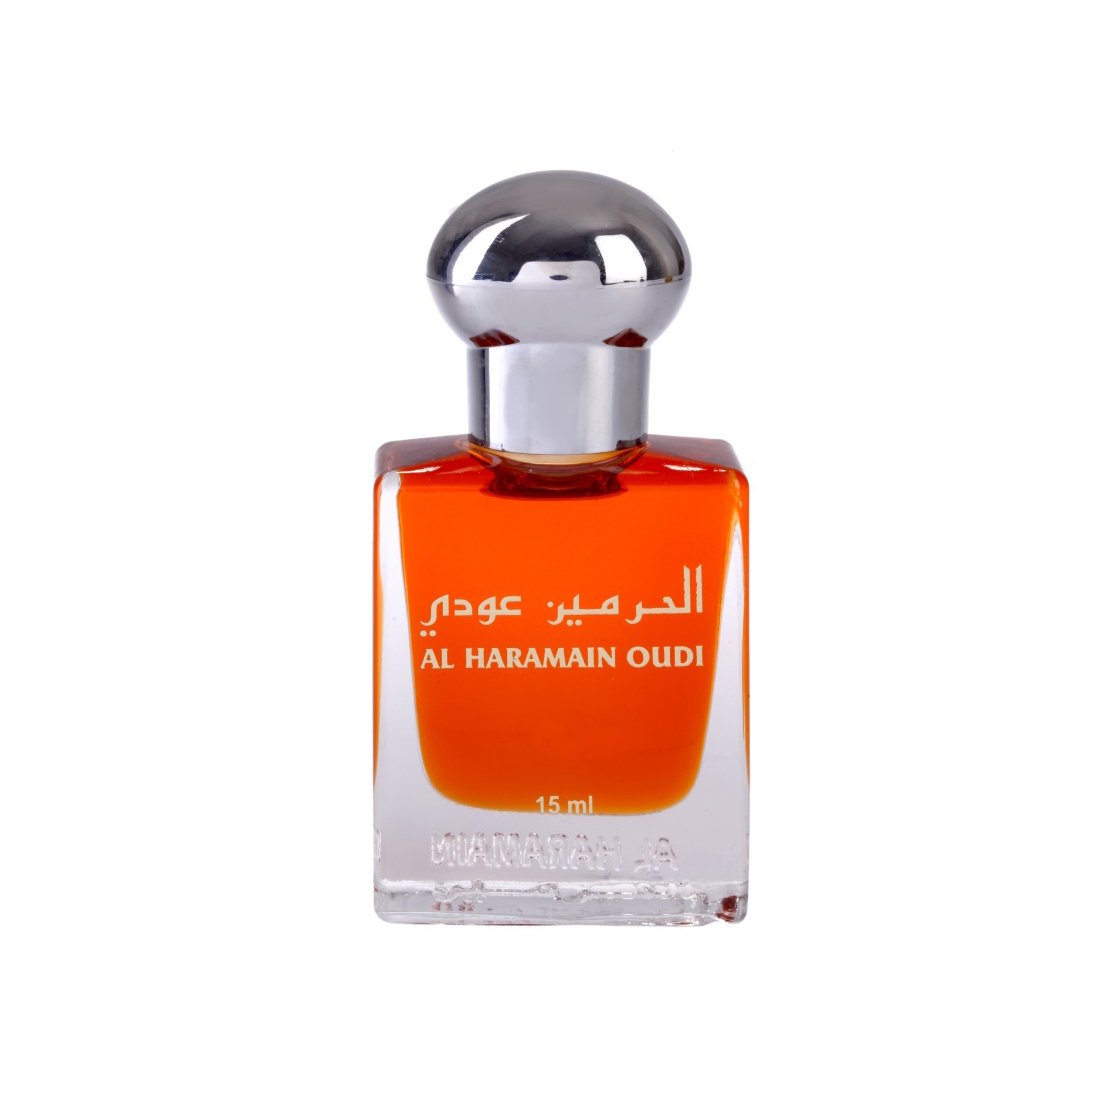 Al Haramain Oudi Fragrance Pure Original Roll on Perfume Oil (Attar) - 15 ml